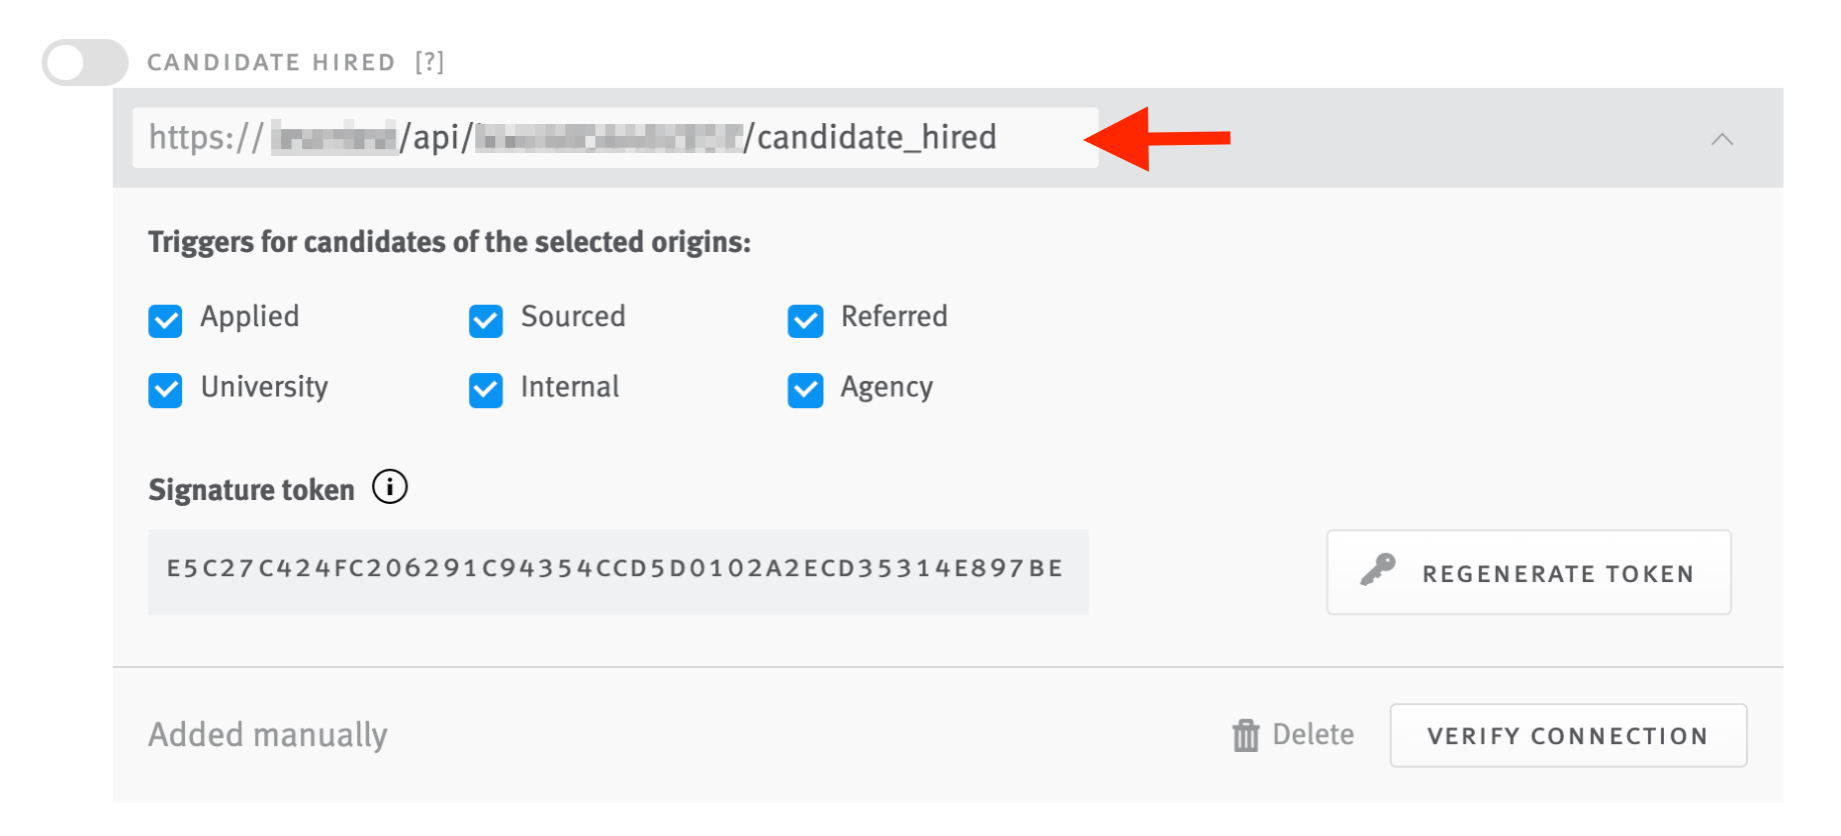 Candidate hired webhook tile with Enboarder webhook URL added.